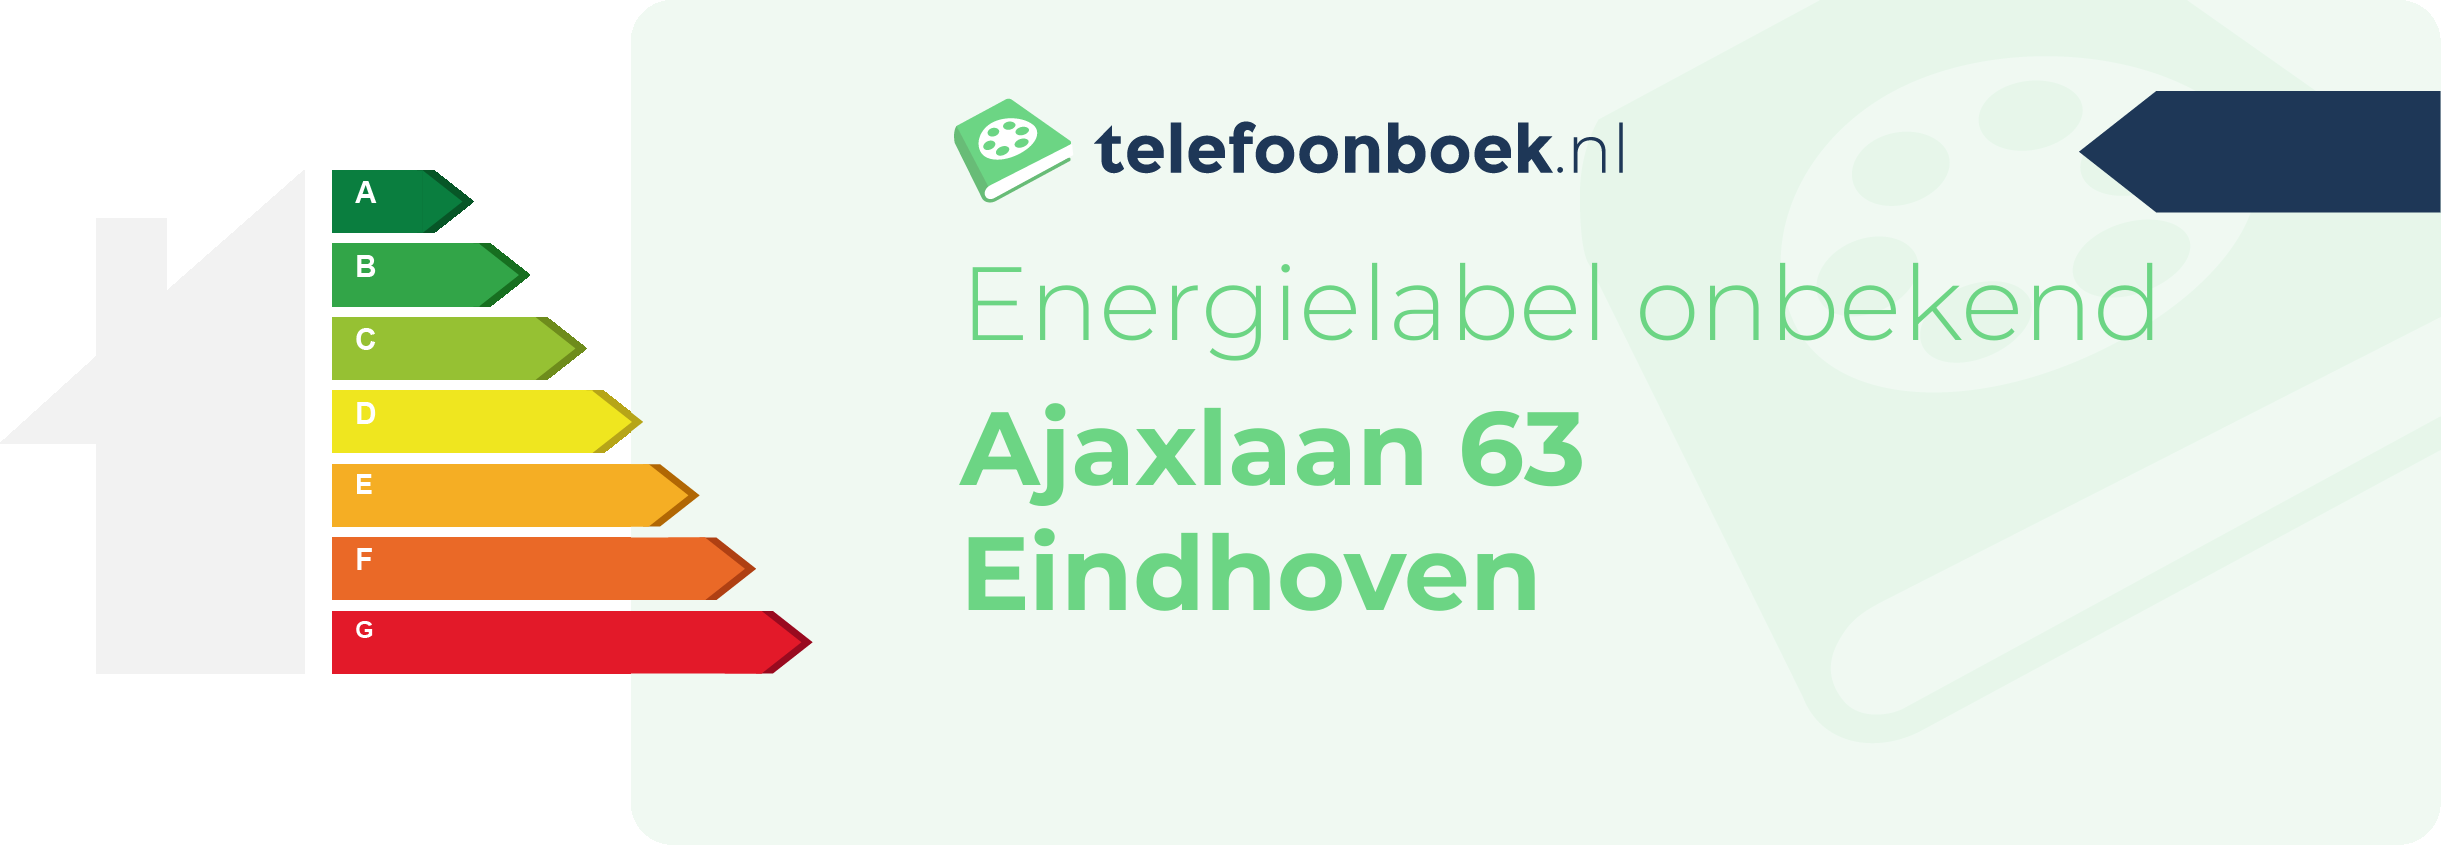 Energielabel Ajaxlaan 63 Eindhoven